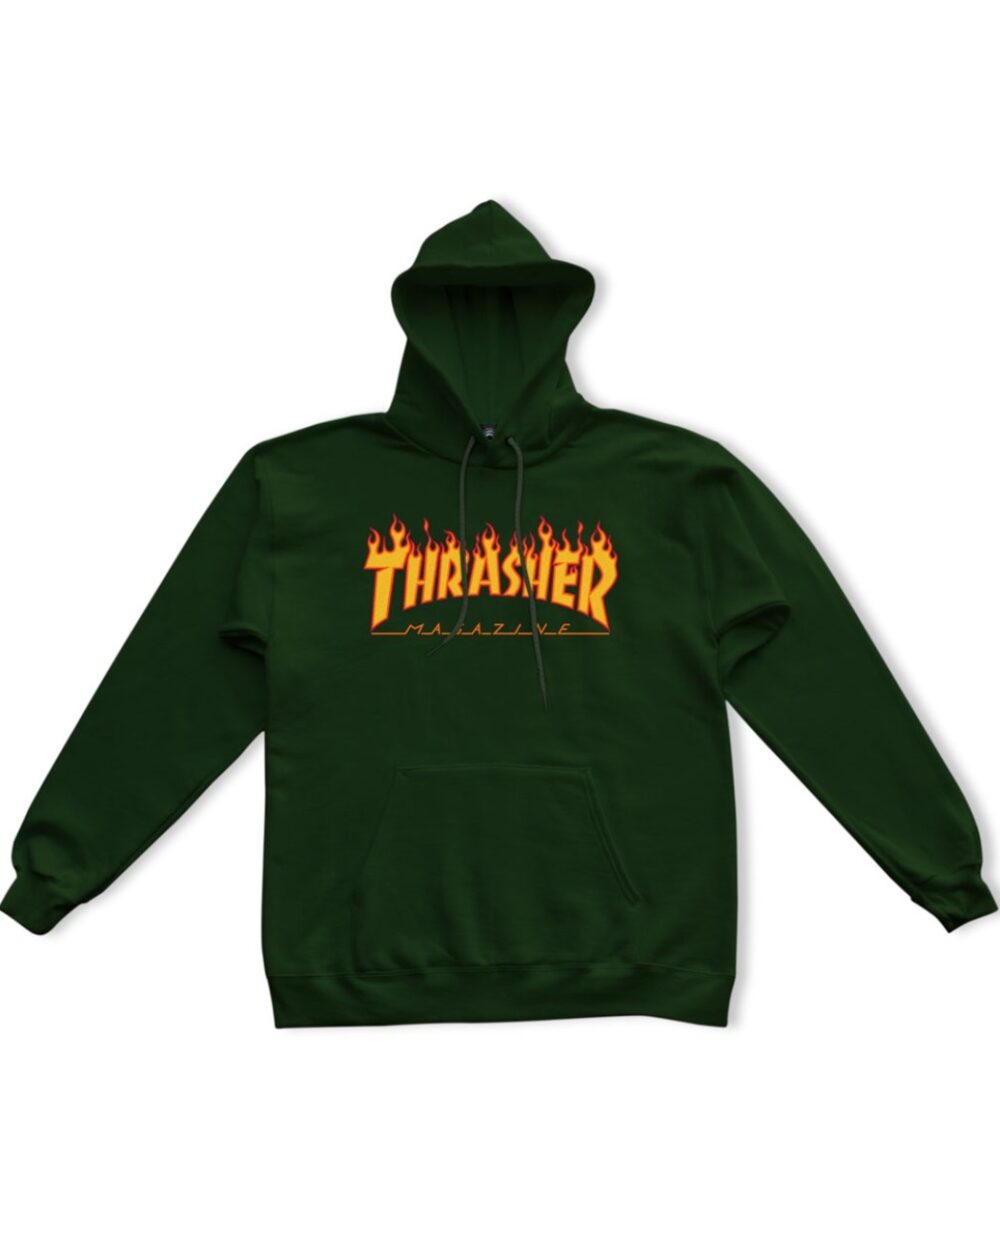 Thrasher Flame Hoodie, Thrasher Zip-Up Hooded Sweatshirt, Thrasher Logo Navy Hoodie, Skateboard Fashion Hoodie